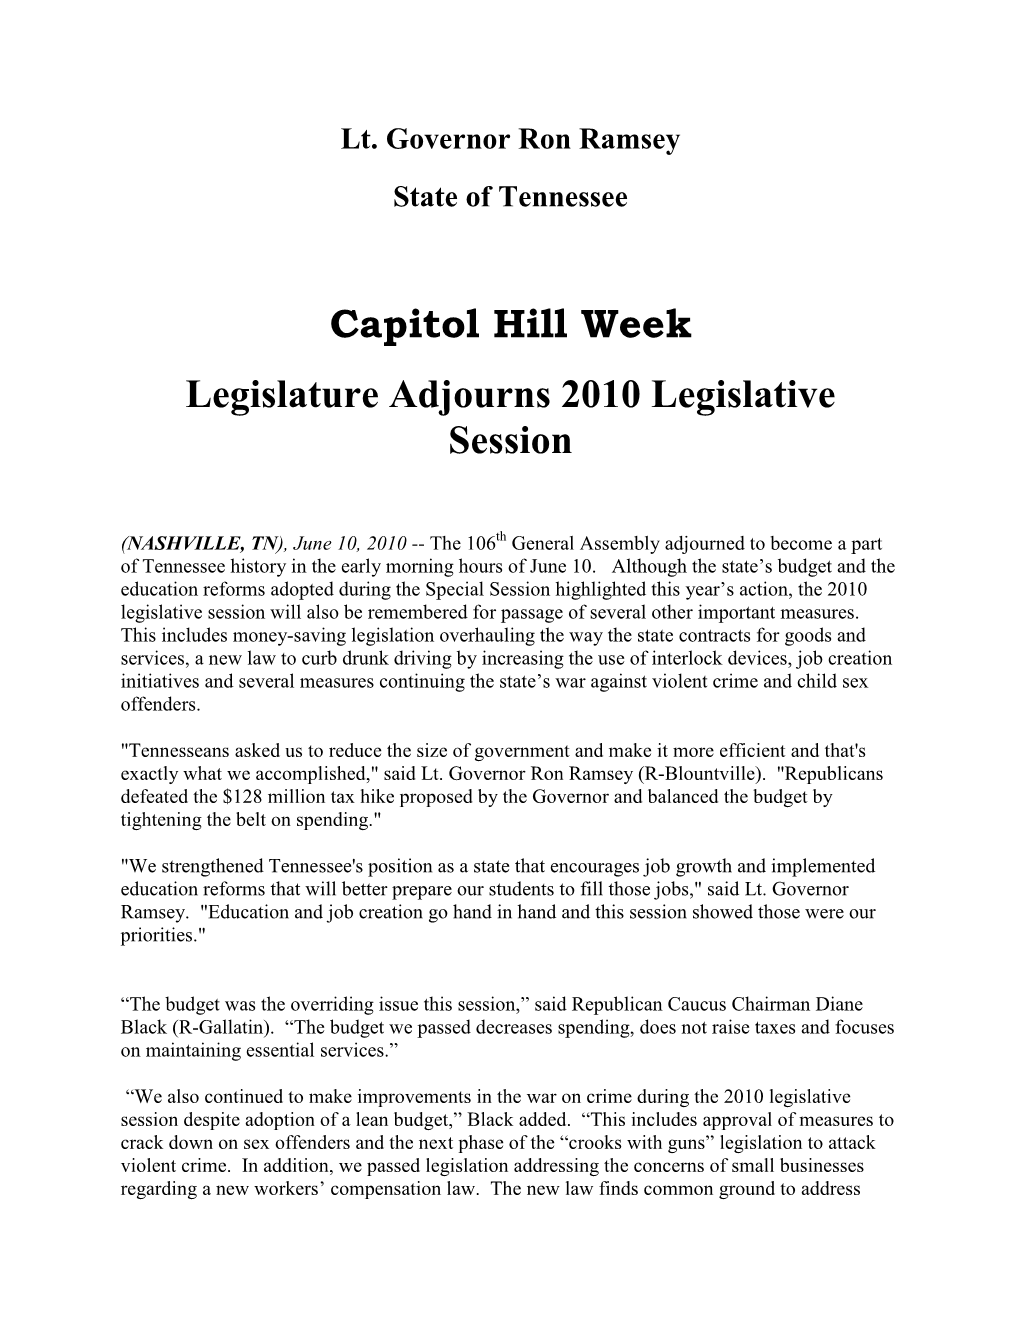 Capitol Hill Week Legislature Adjourns 2010 Legislative Session